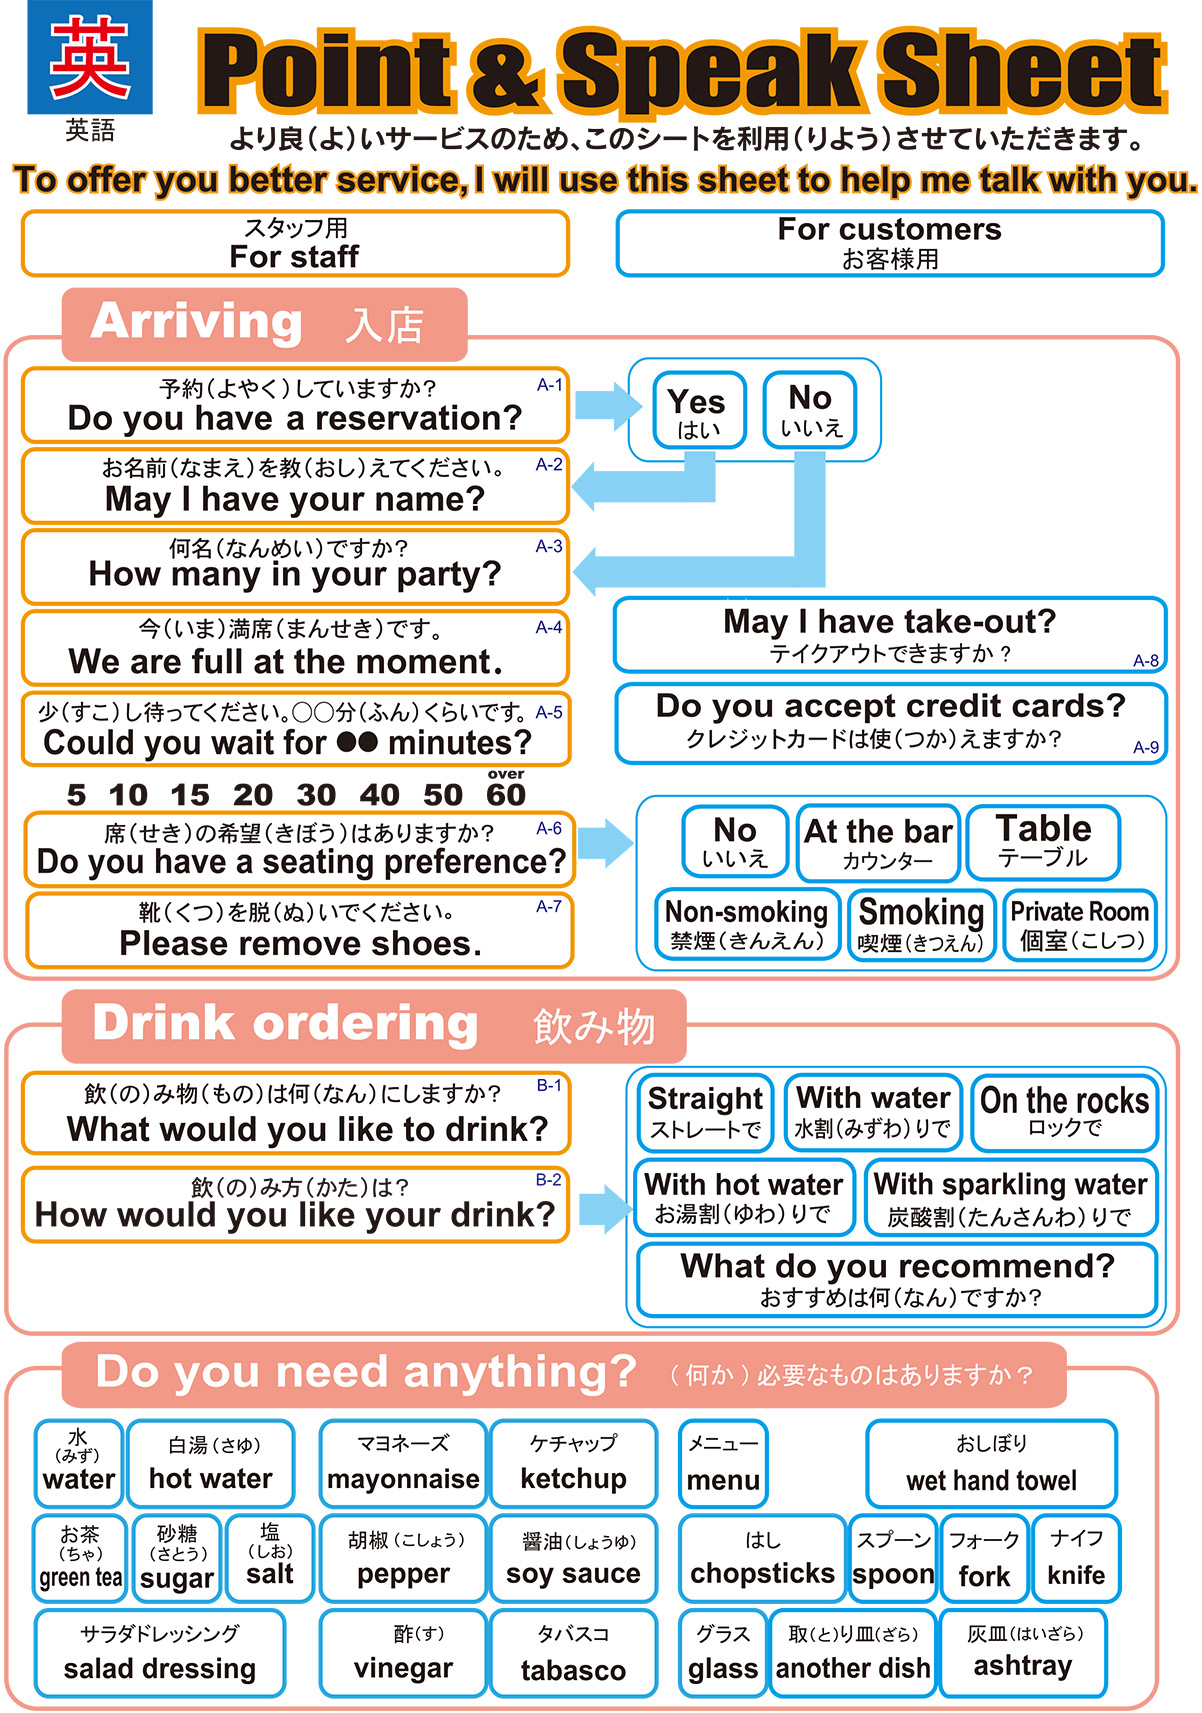 Point & Speak Sheet in English